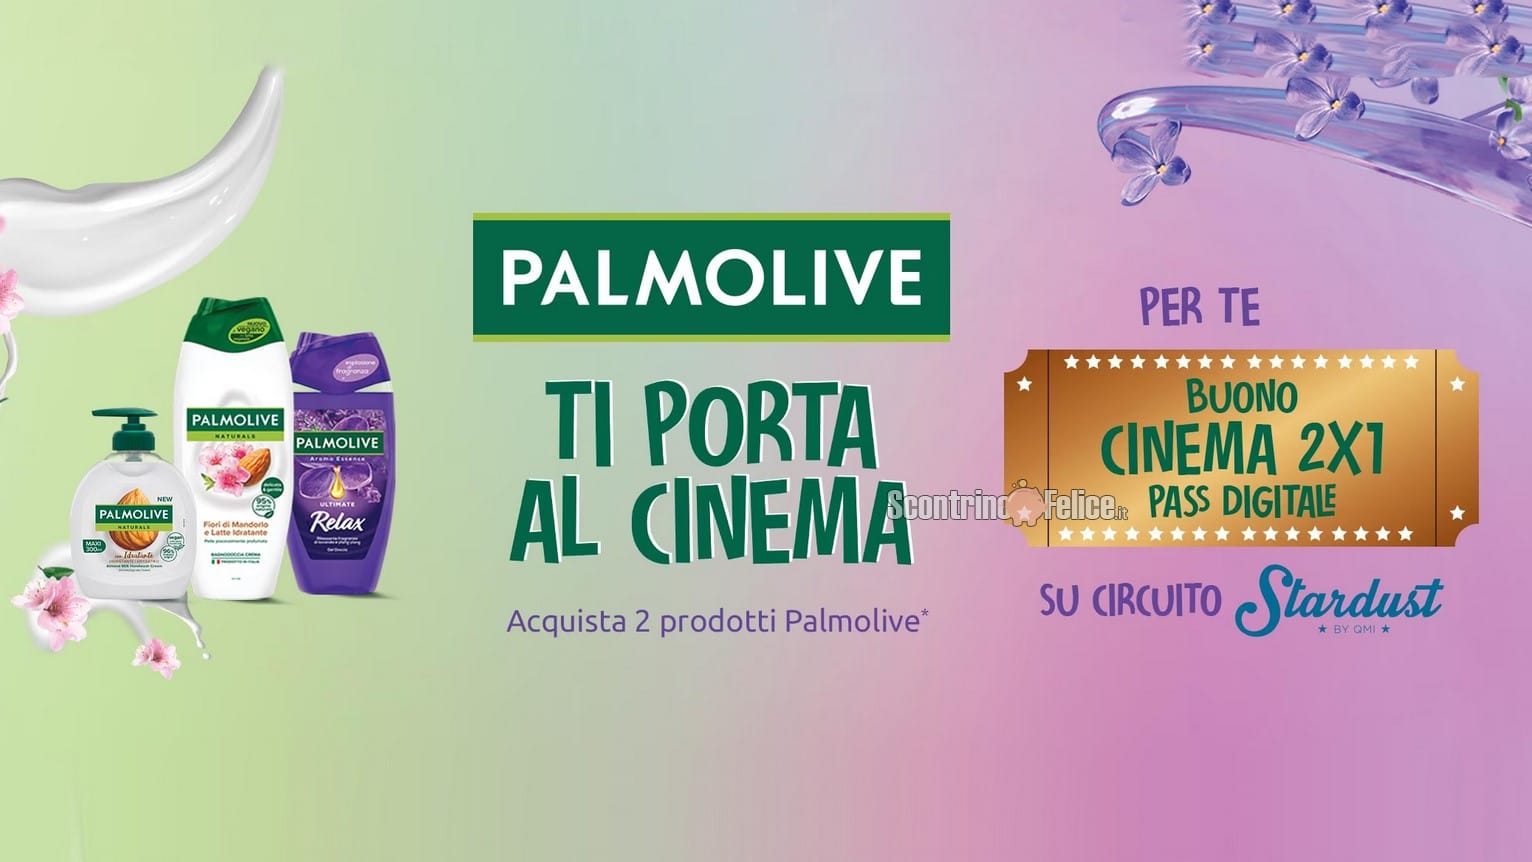 Premio certo Palmolive: ricevi biglietti cinema